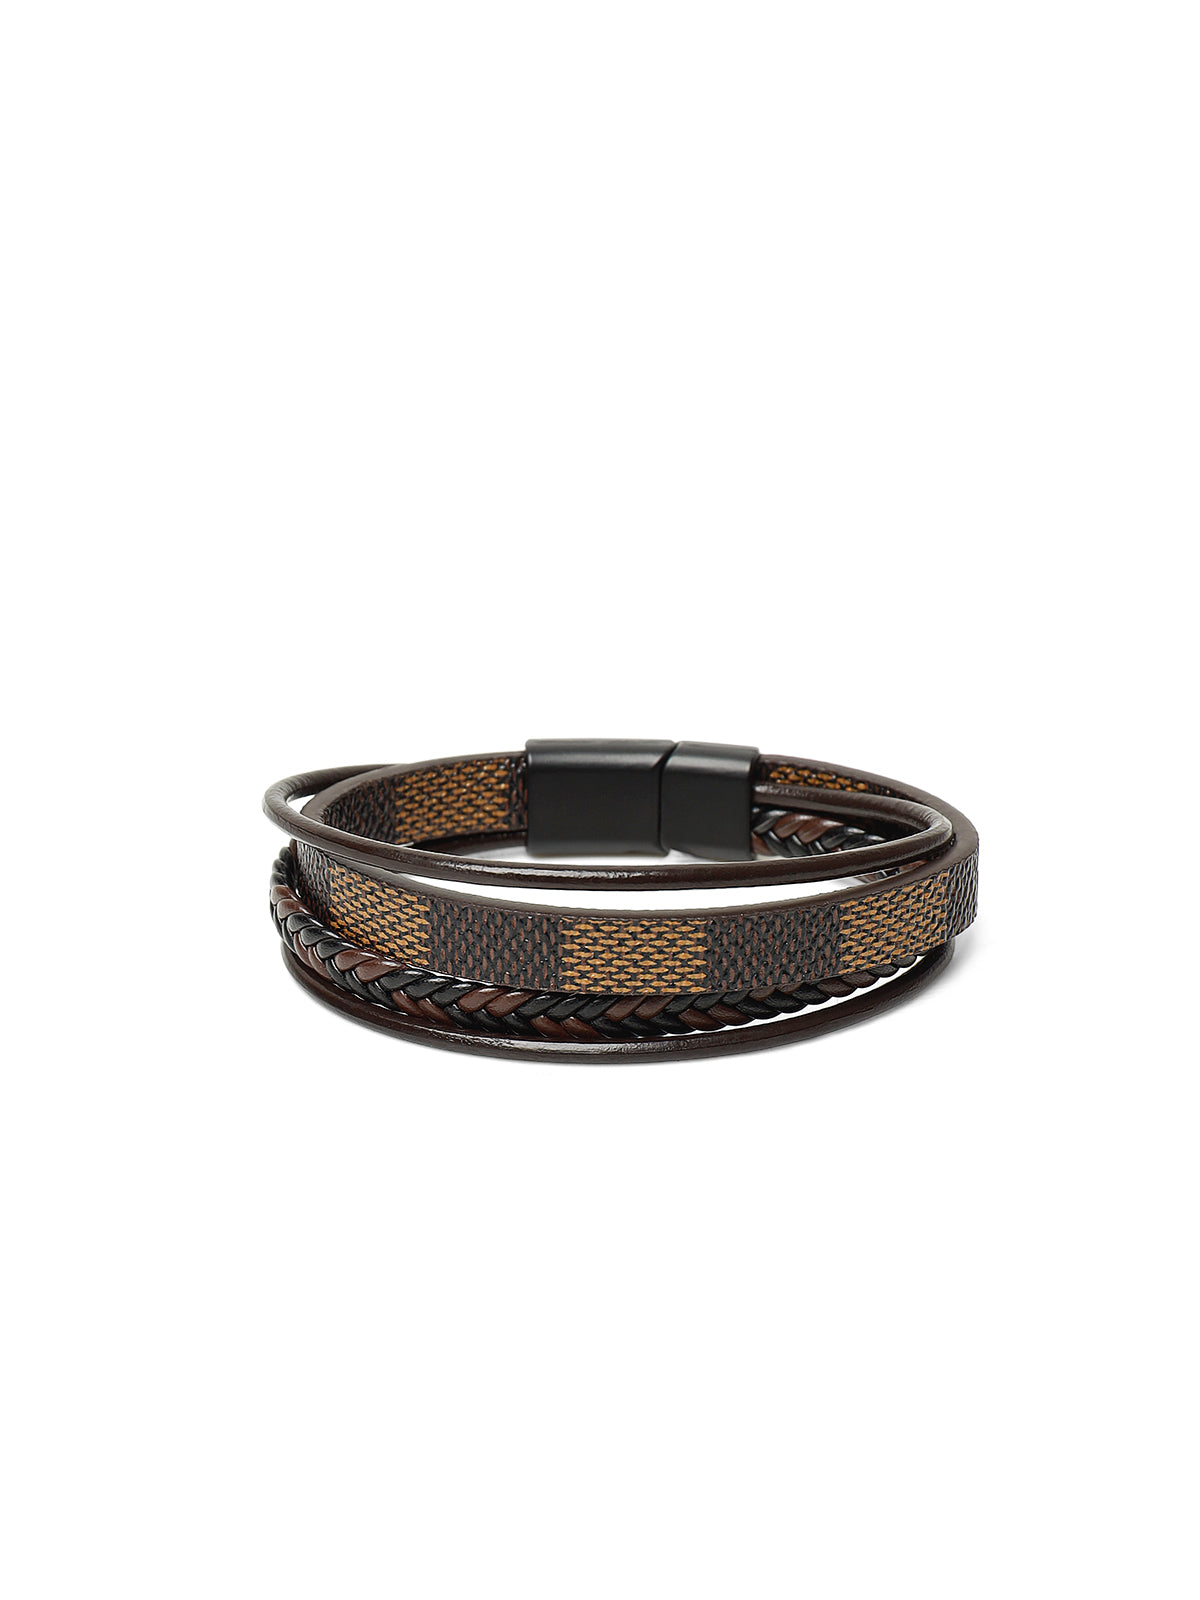 Brown Leather Bracelet - FABR24-023